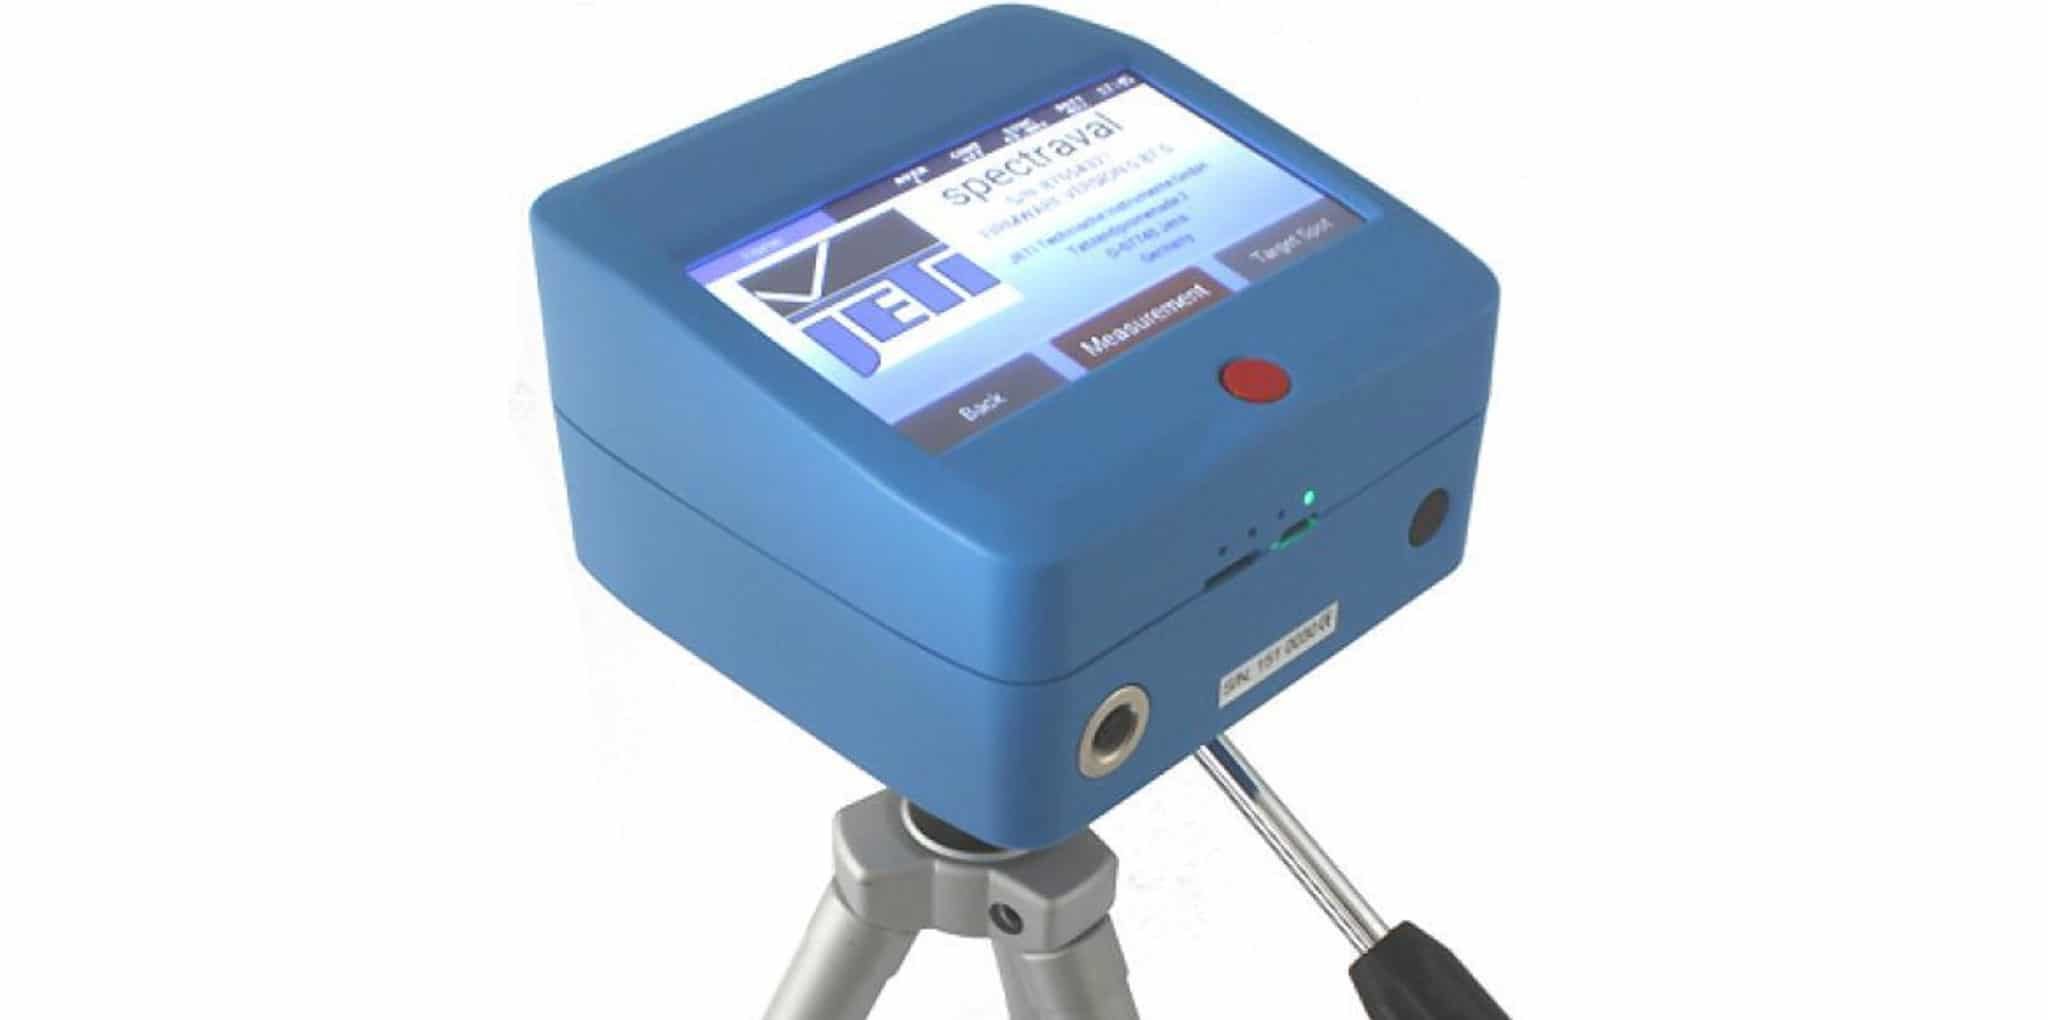 Photomètre - Spectroradiomètre spectraval 1511_0